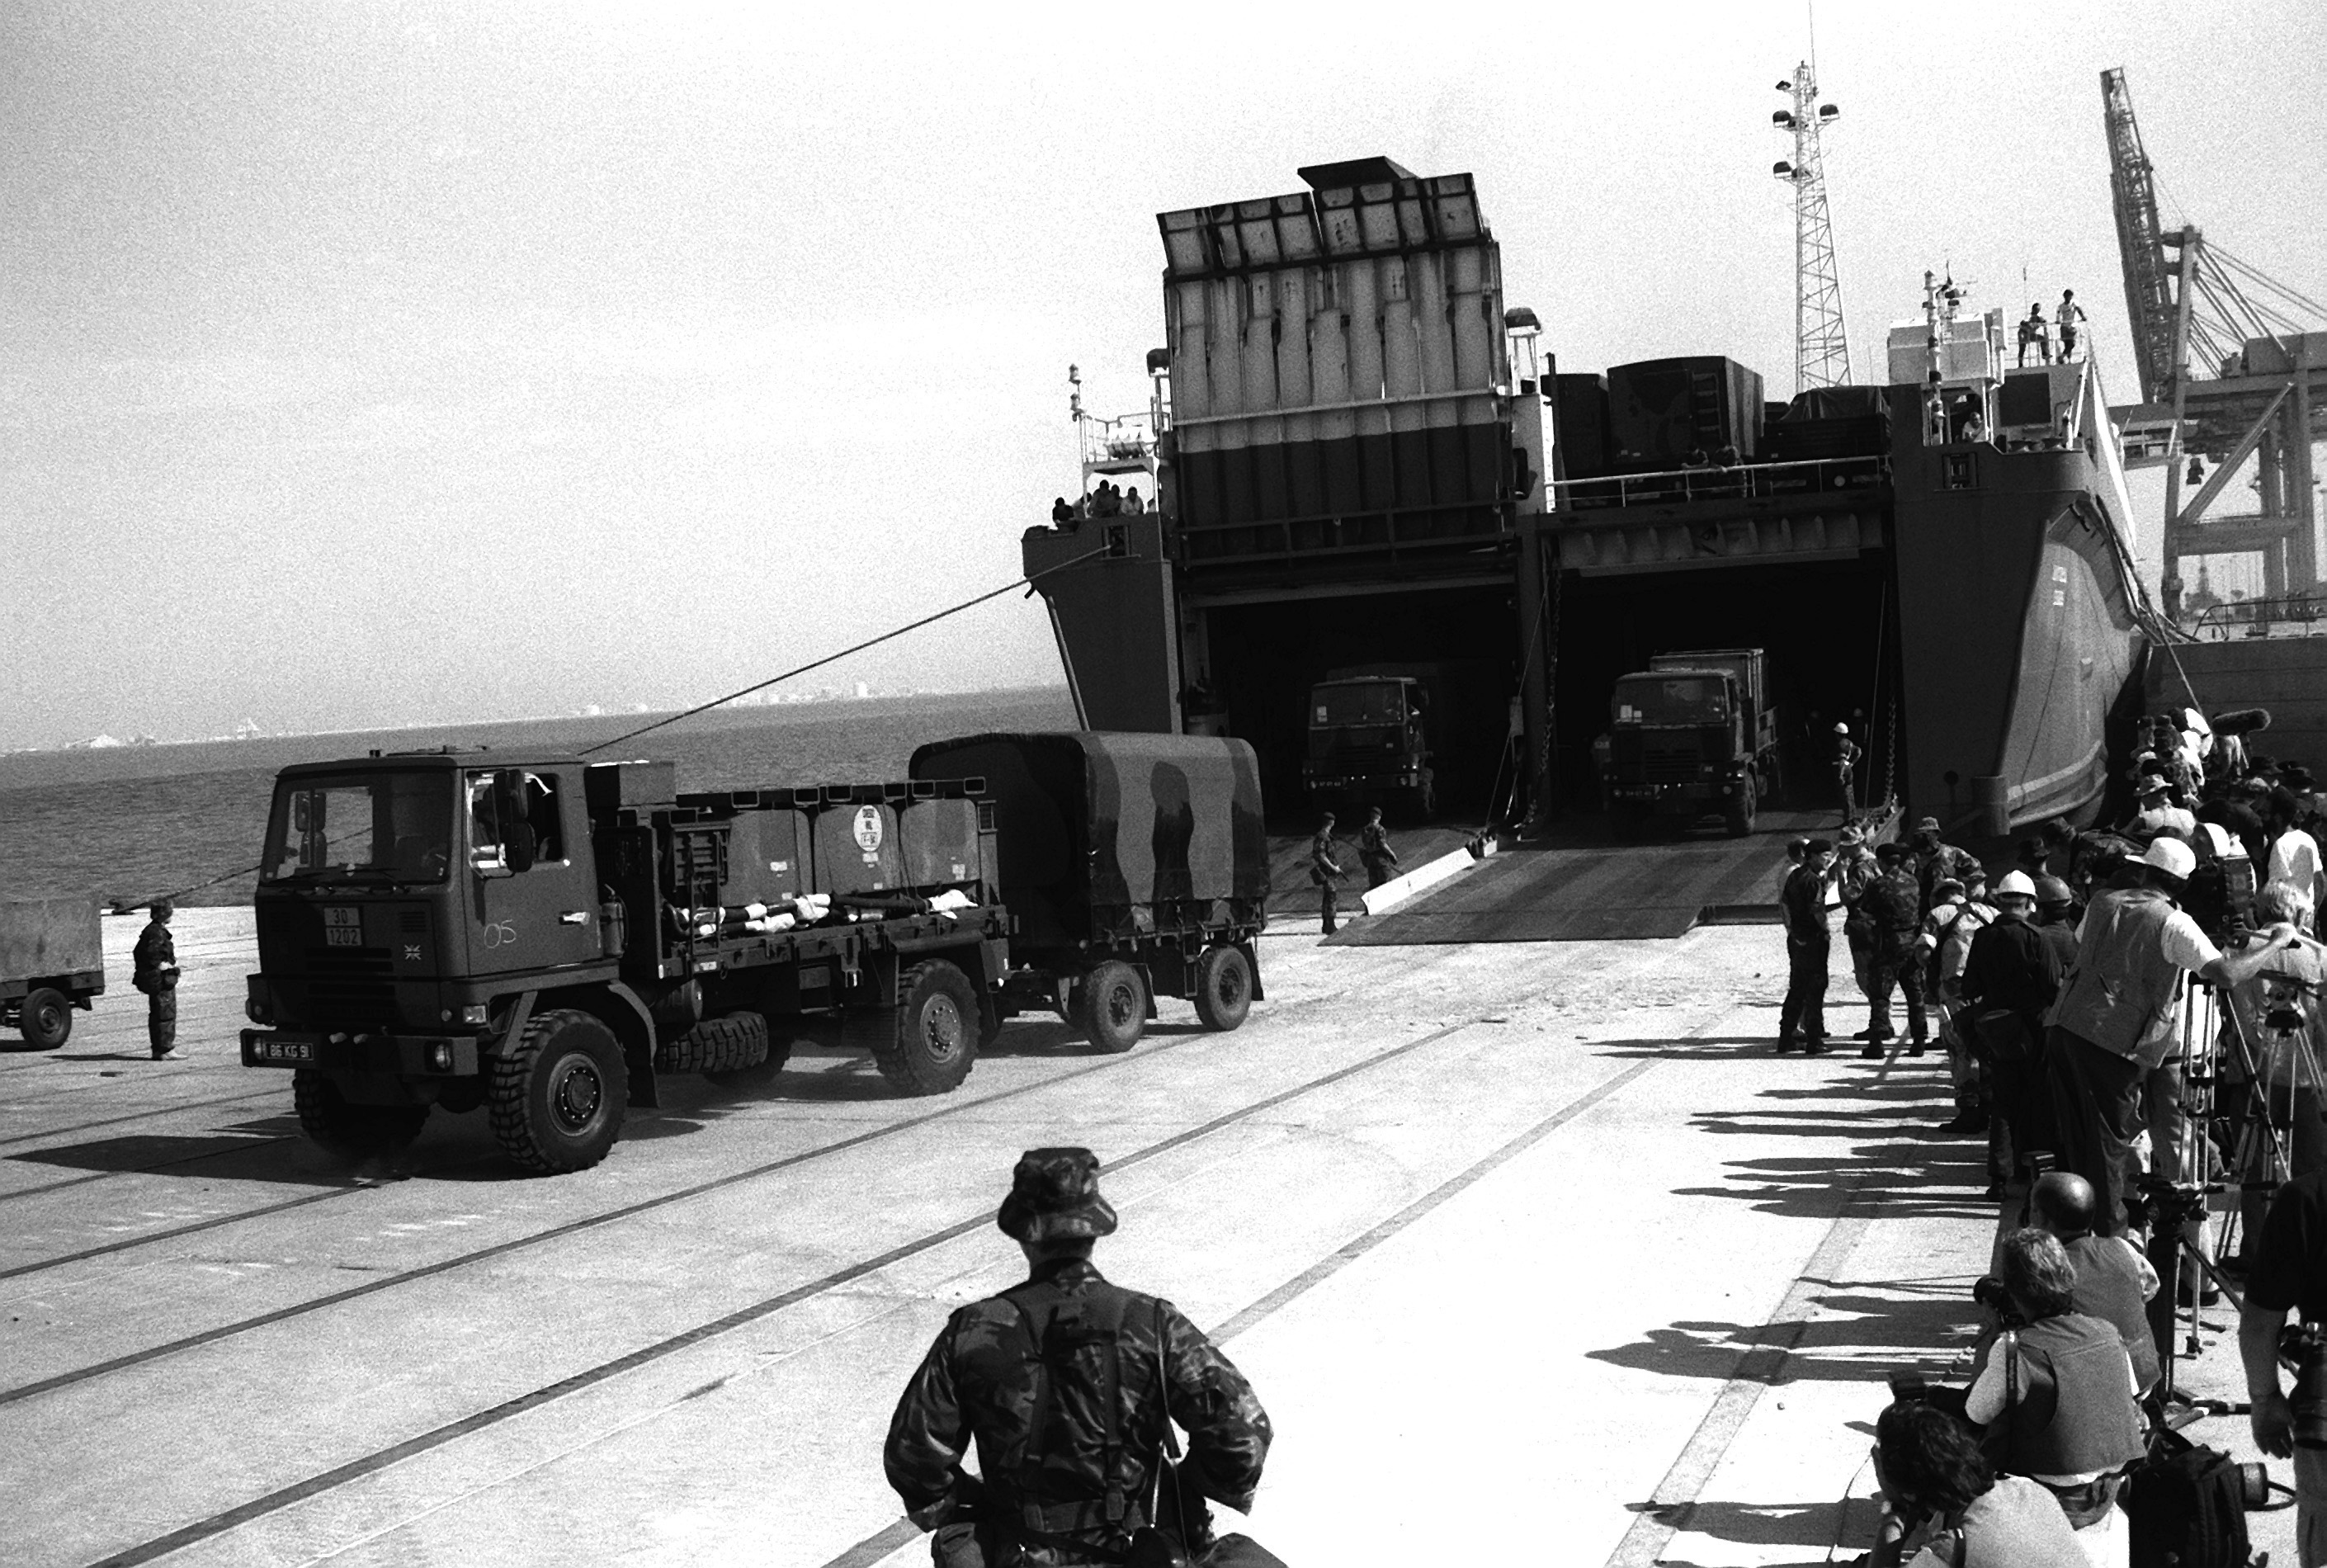 A British Bedford TM 4-4 4x4 truck leaves the Danish cargo ship Dana Cimbria during Operation Desert Shield